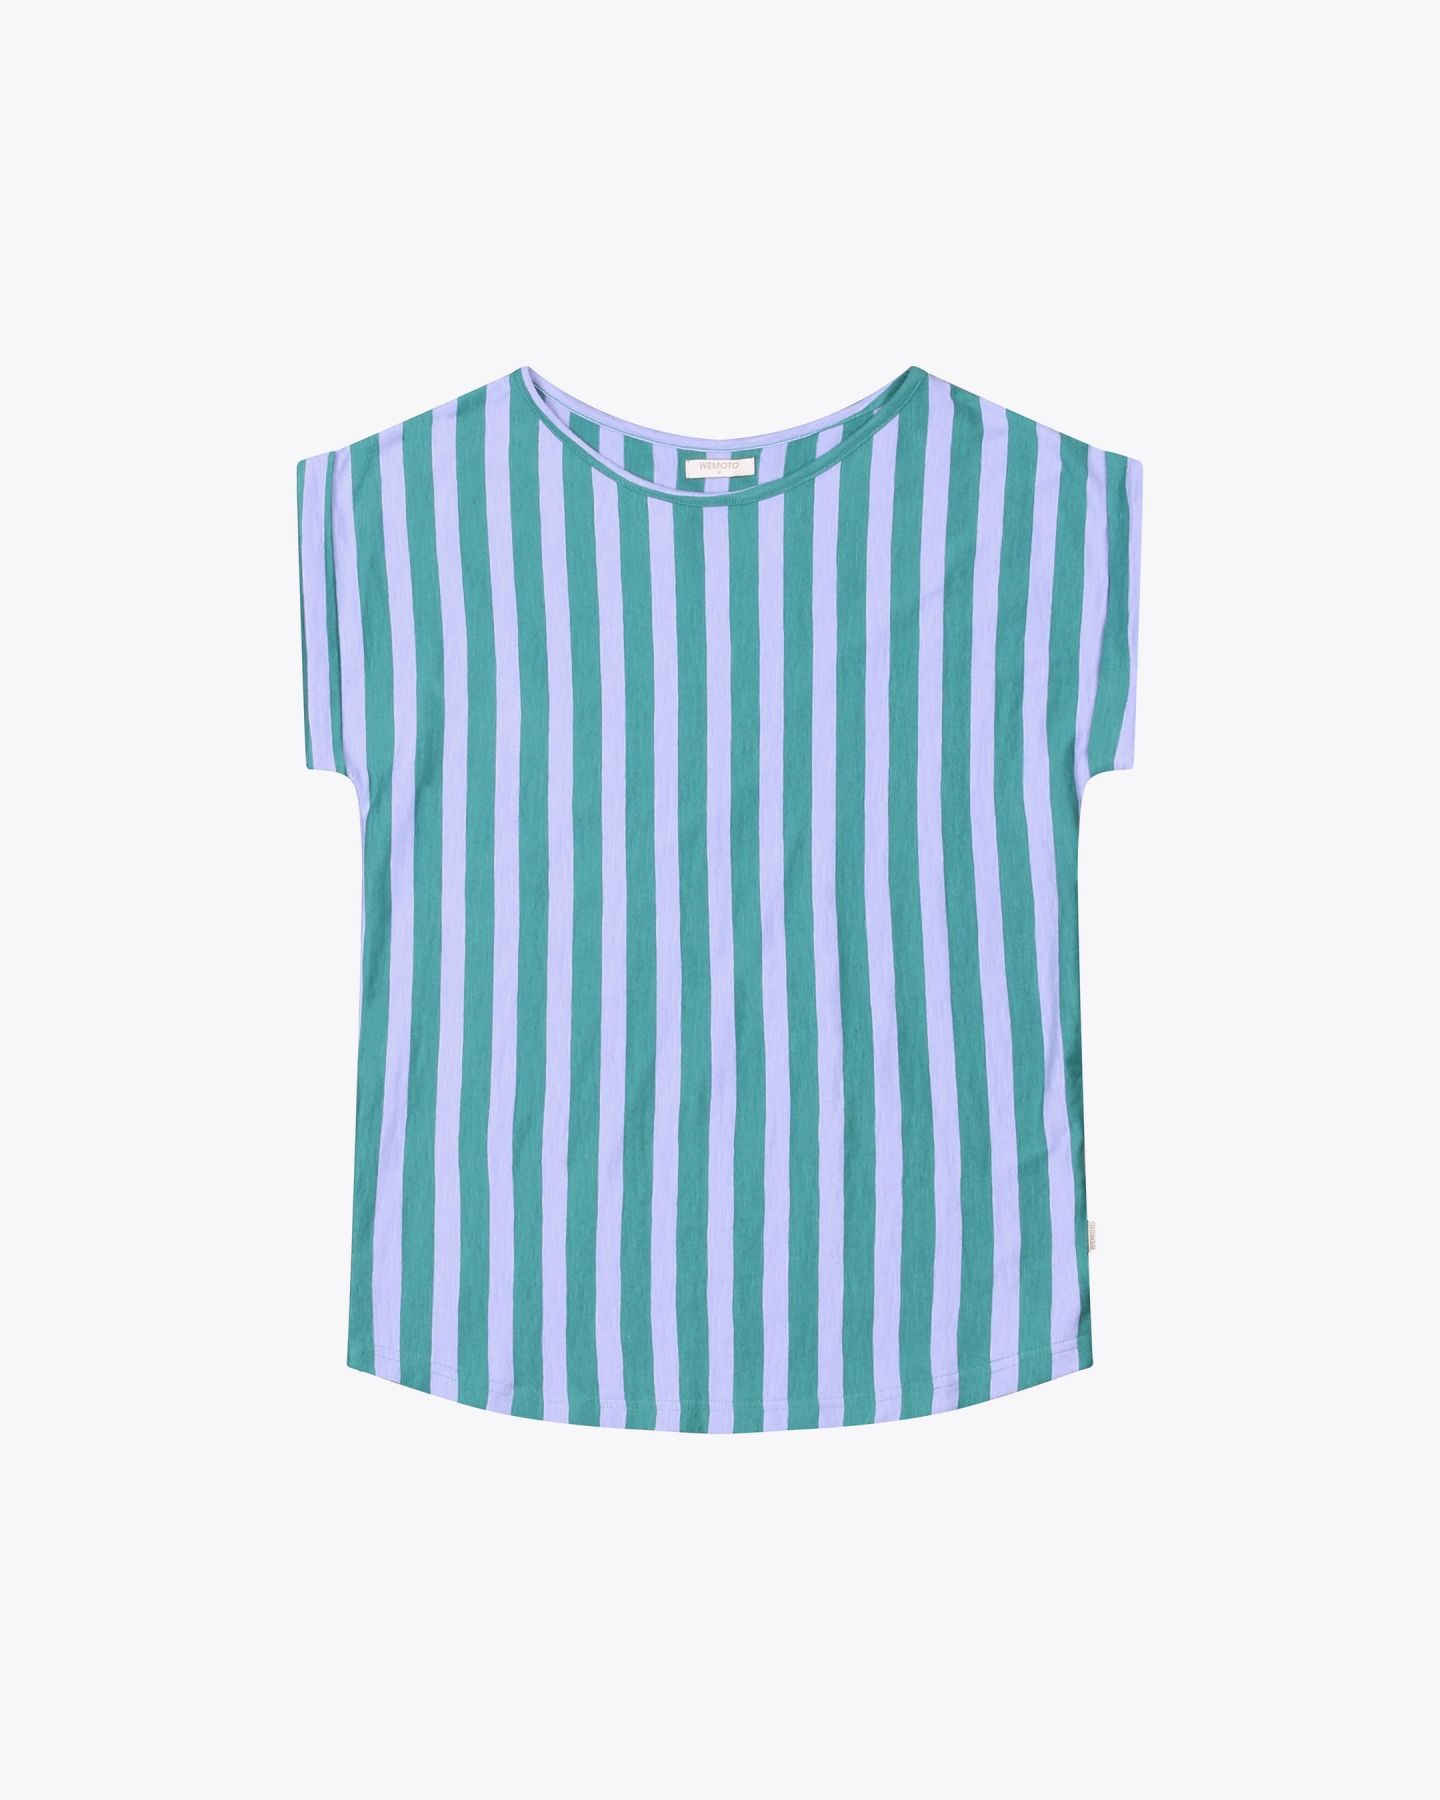 WEMOTO - Holly T-Shirt - Lavender Teal